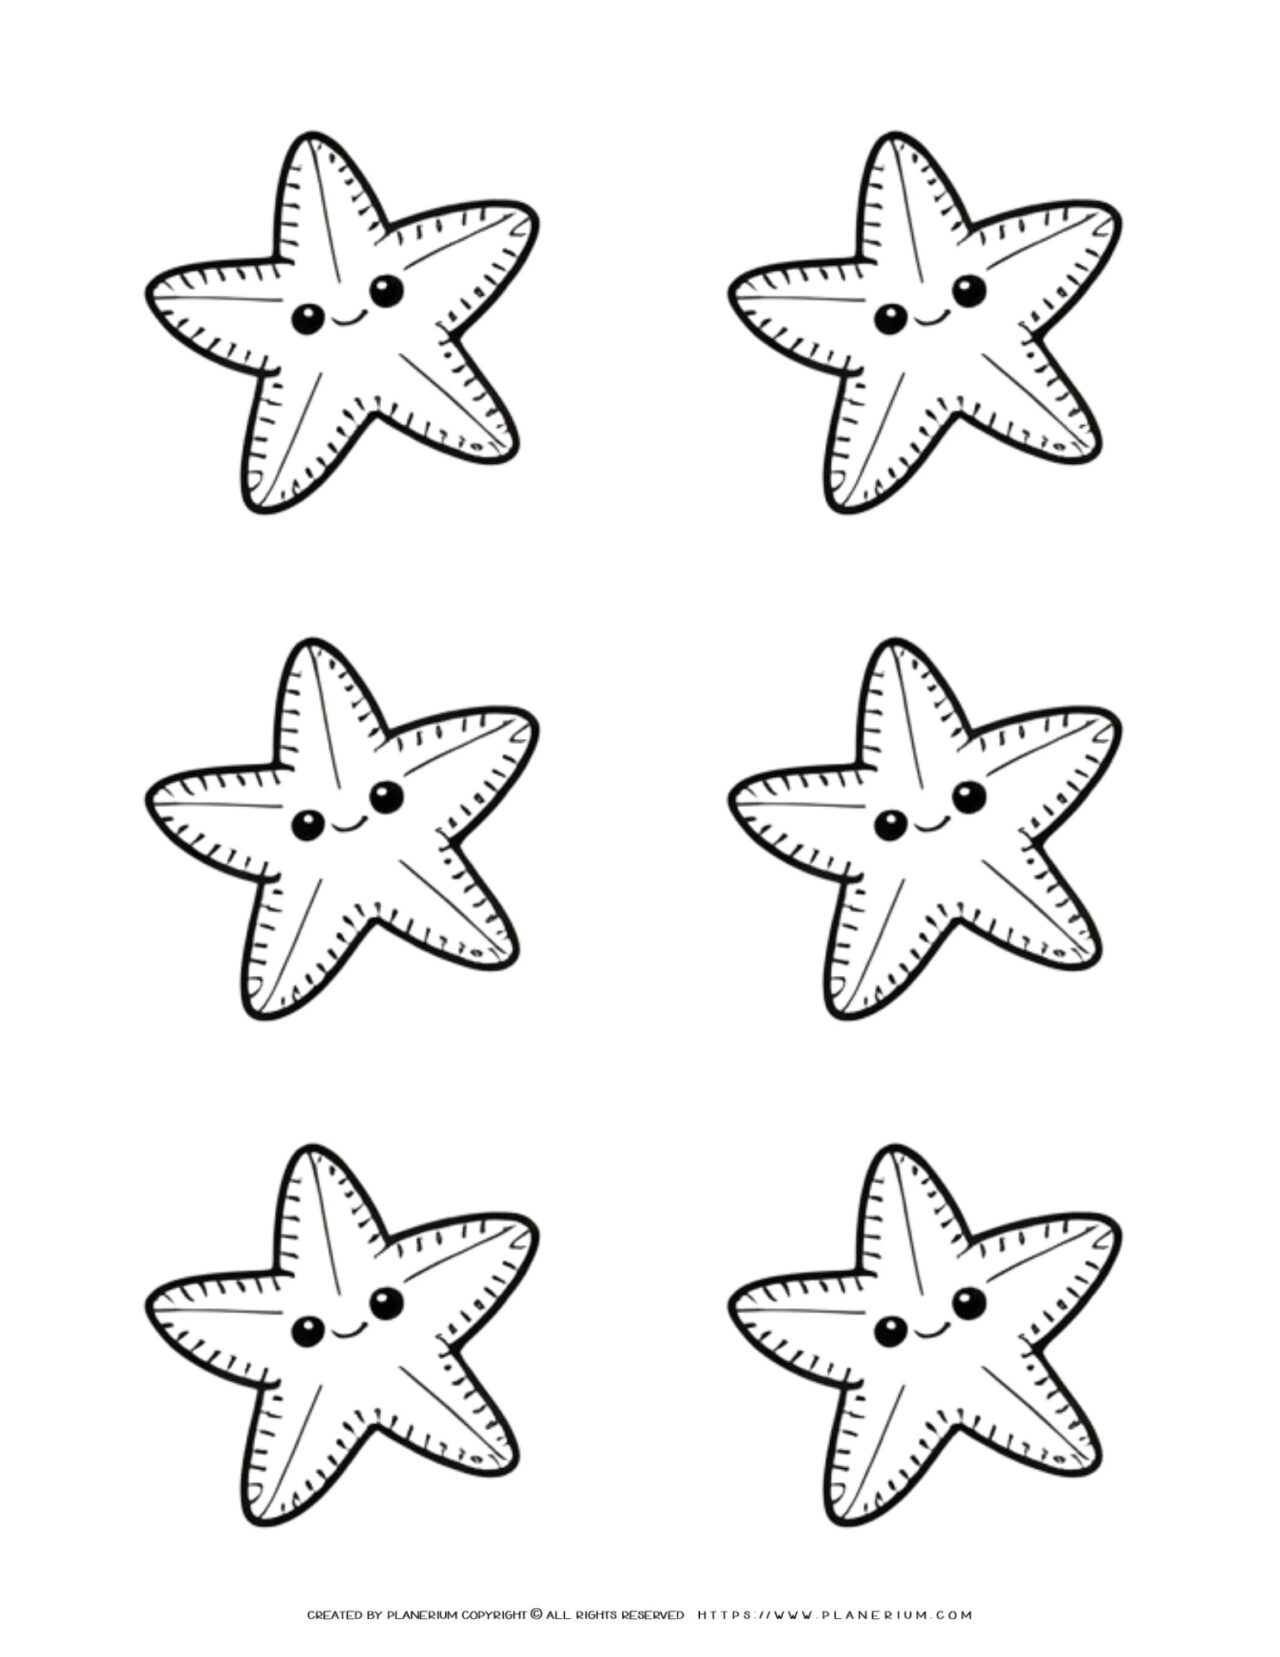 Six-smiling-starfish-illustrations-black-and-white